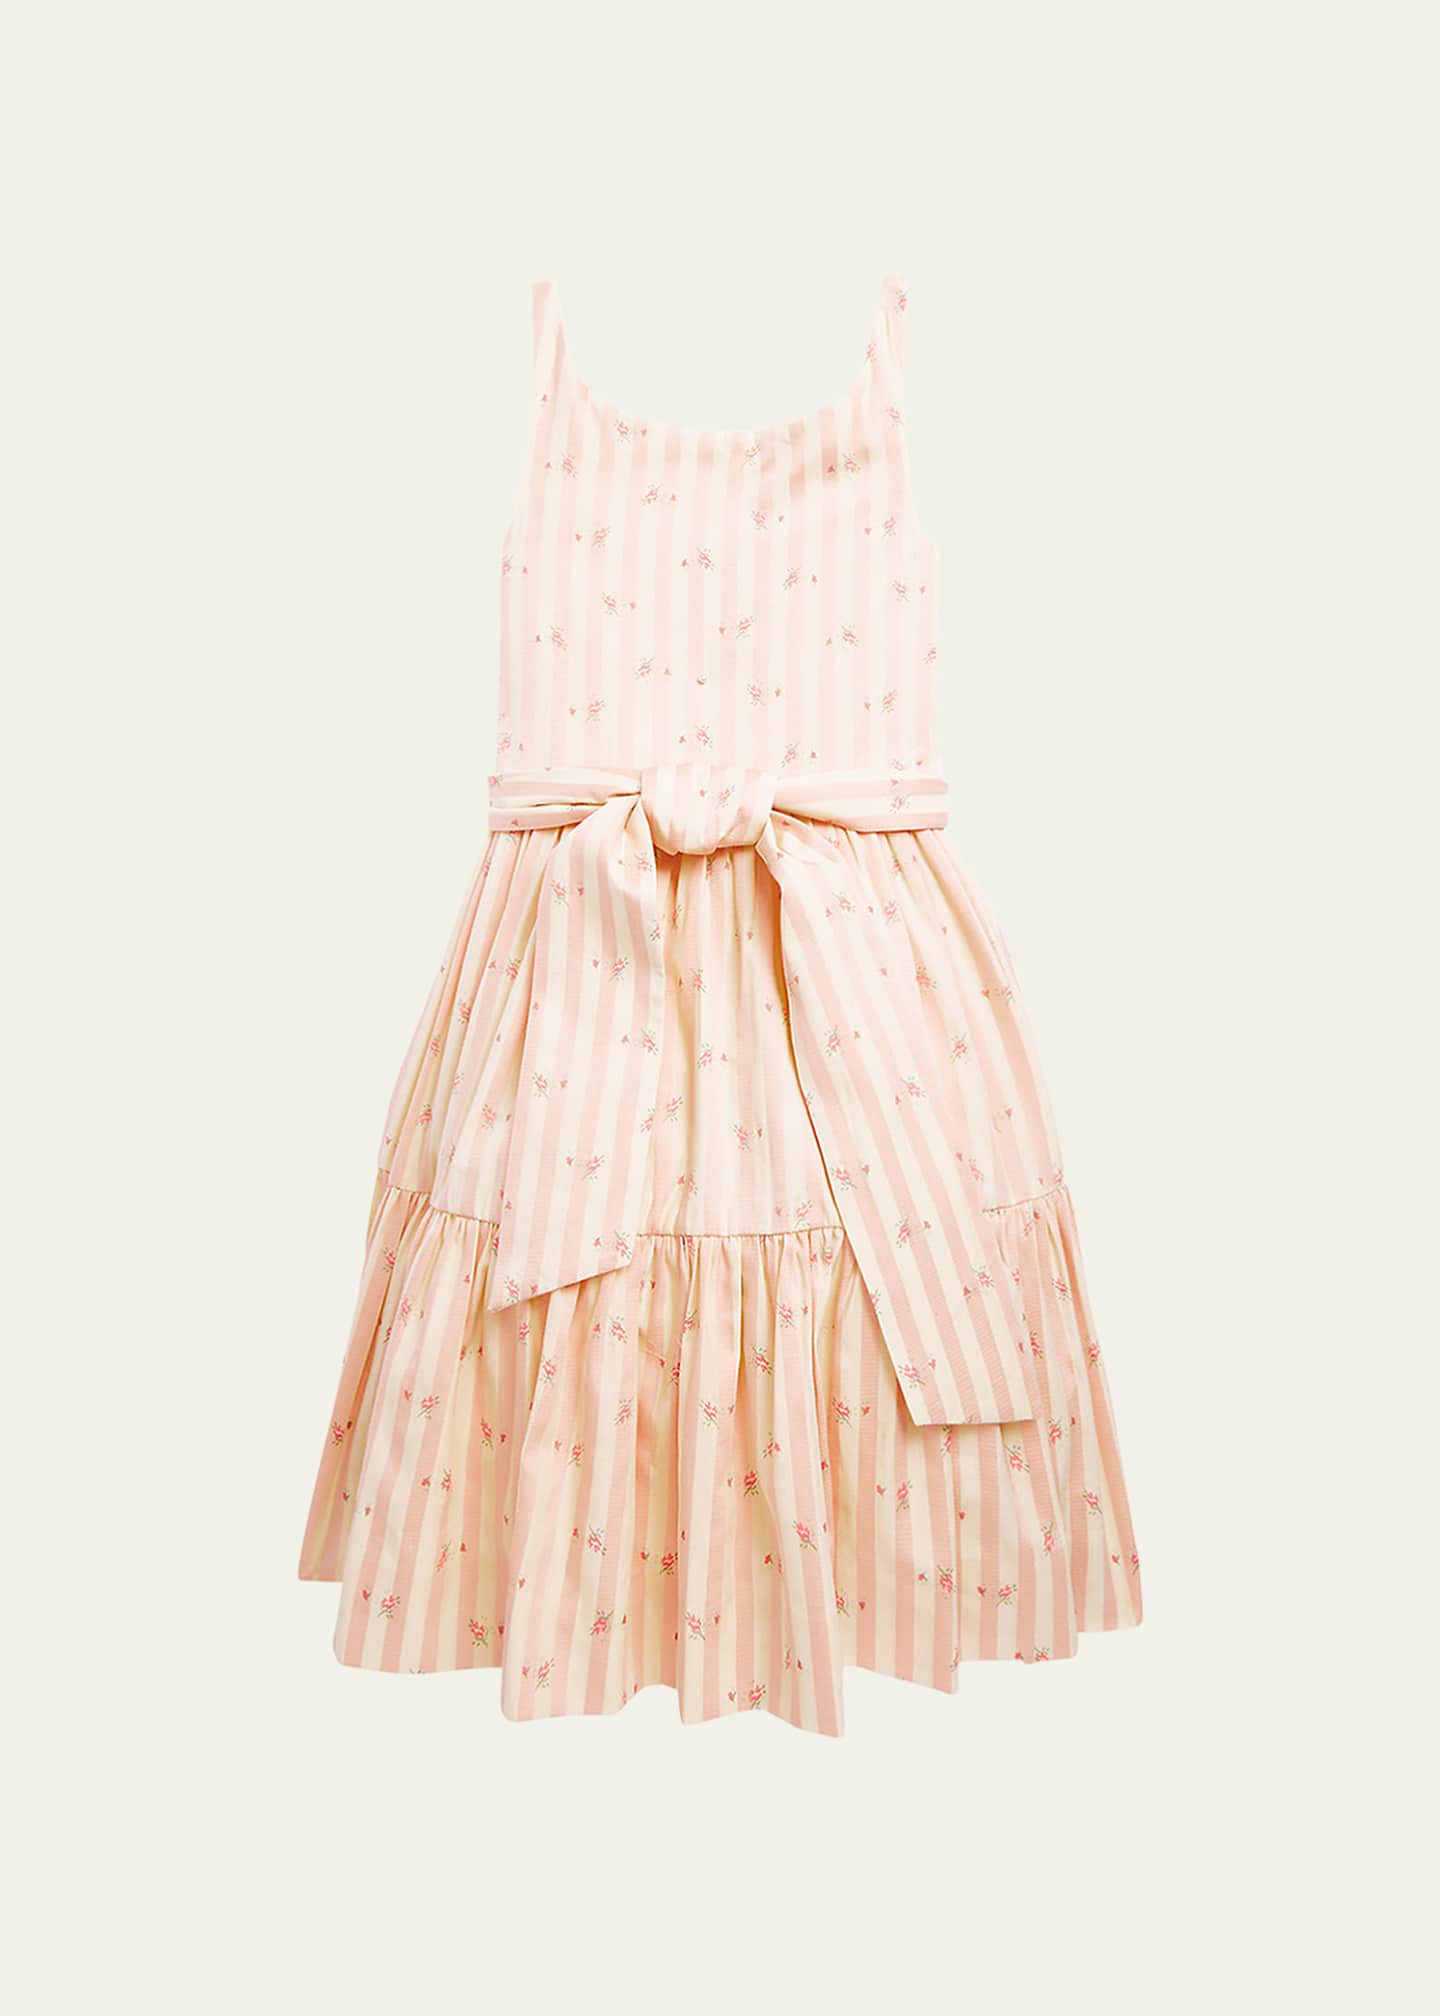 Ralph Lauren Childrenswear Girl's Striped Floral-Print Tiered Dress, Size 5- 6X - Bergdorf Goodman